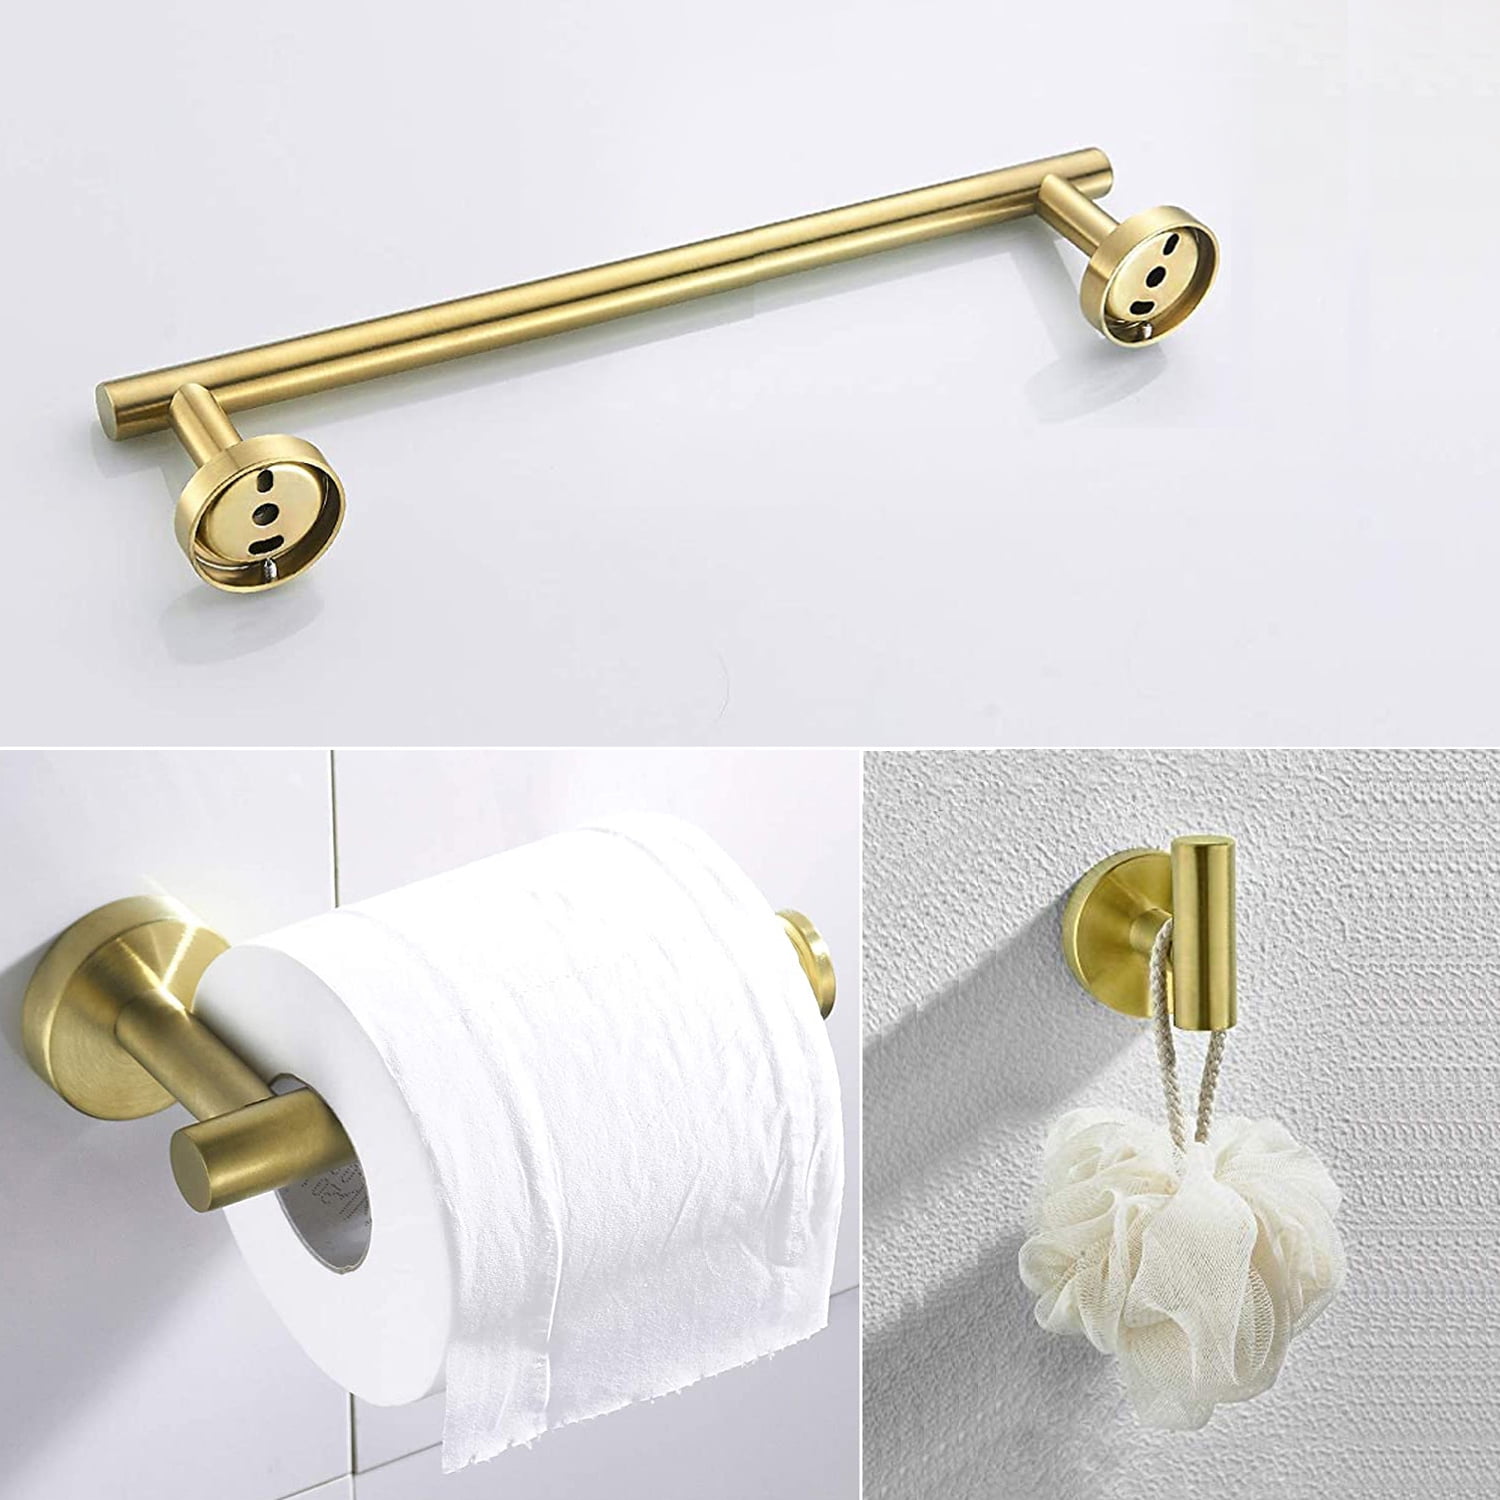 Details about   Sus304 Black Bathroom Hardware Set Towel Bar Rack Toilet Paper Stainless Steel 